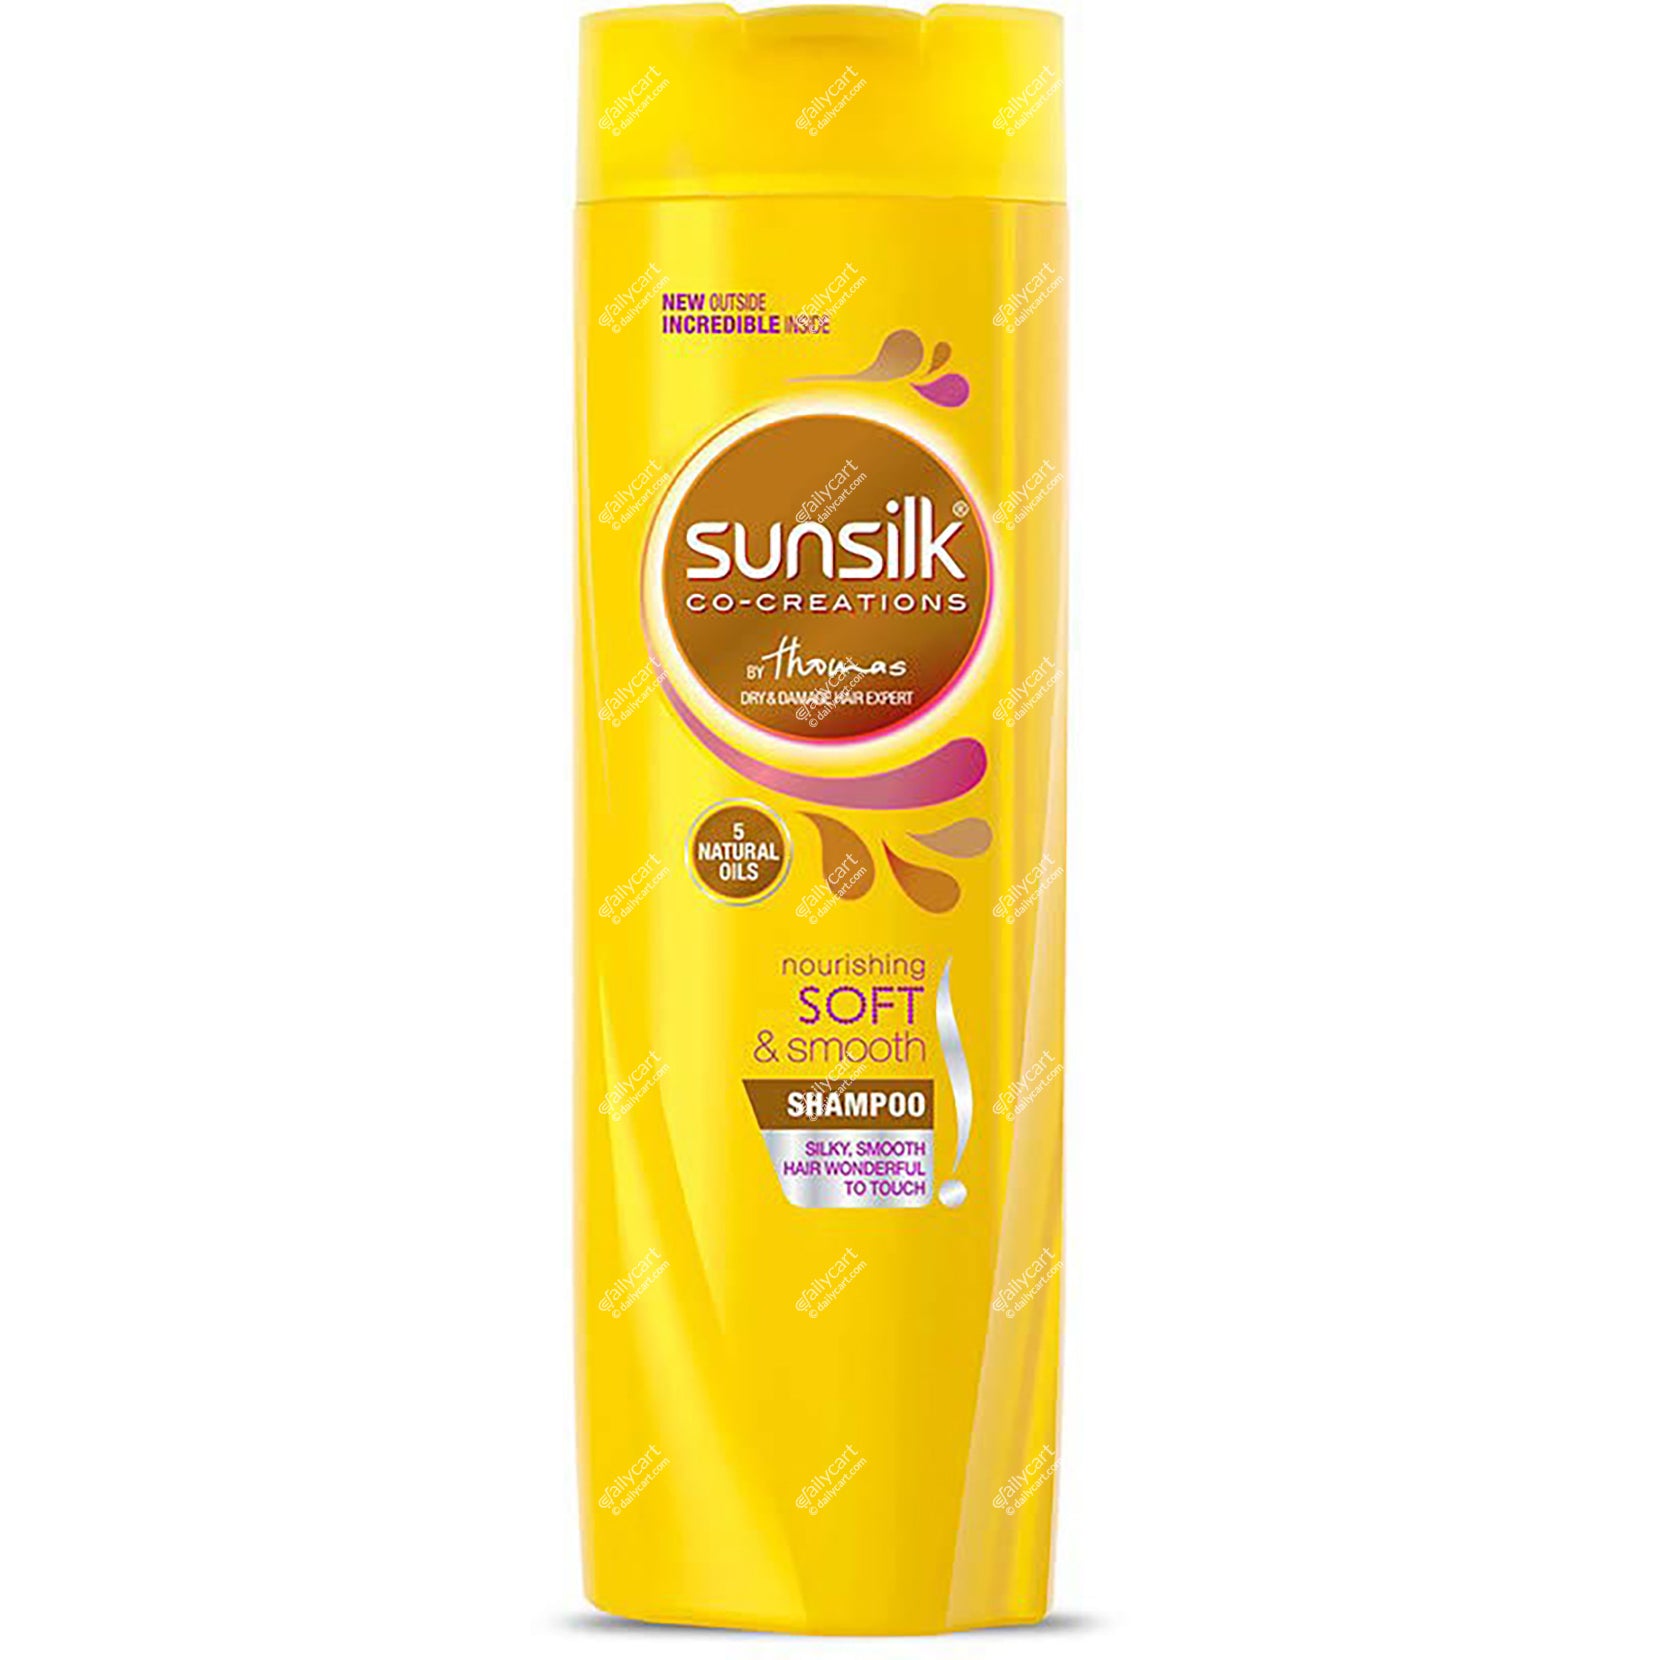 Sunsilk Nourishing Soft & Smooth Shampoo, 340ml